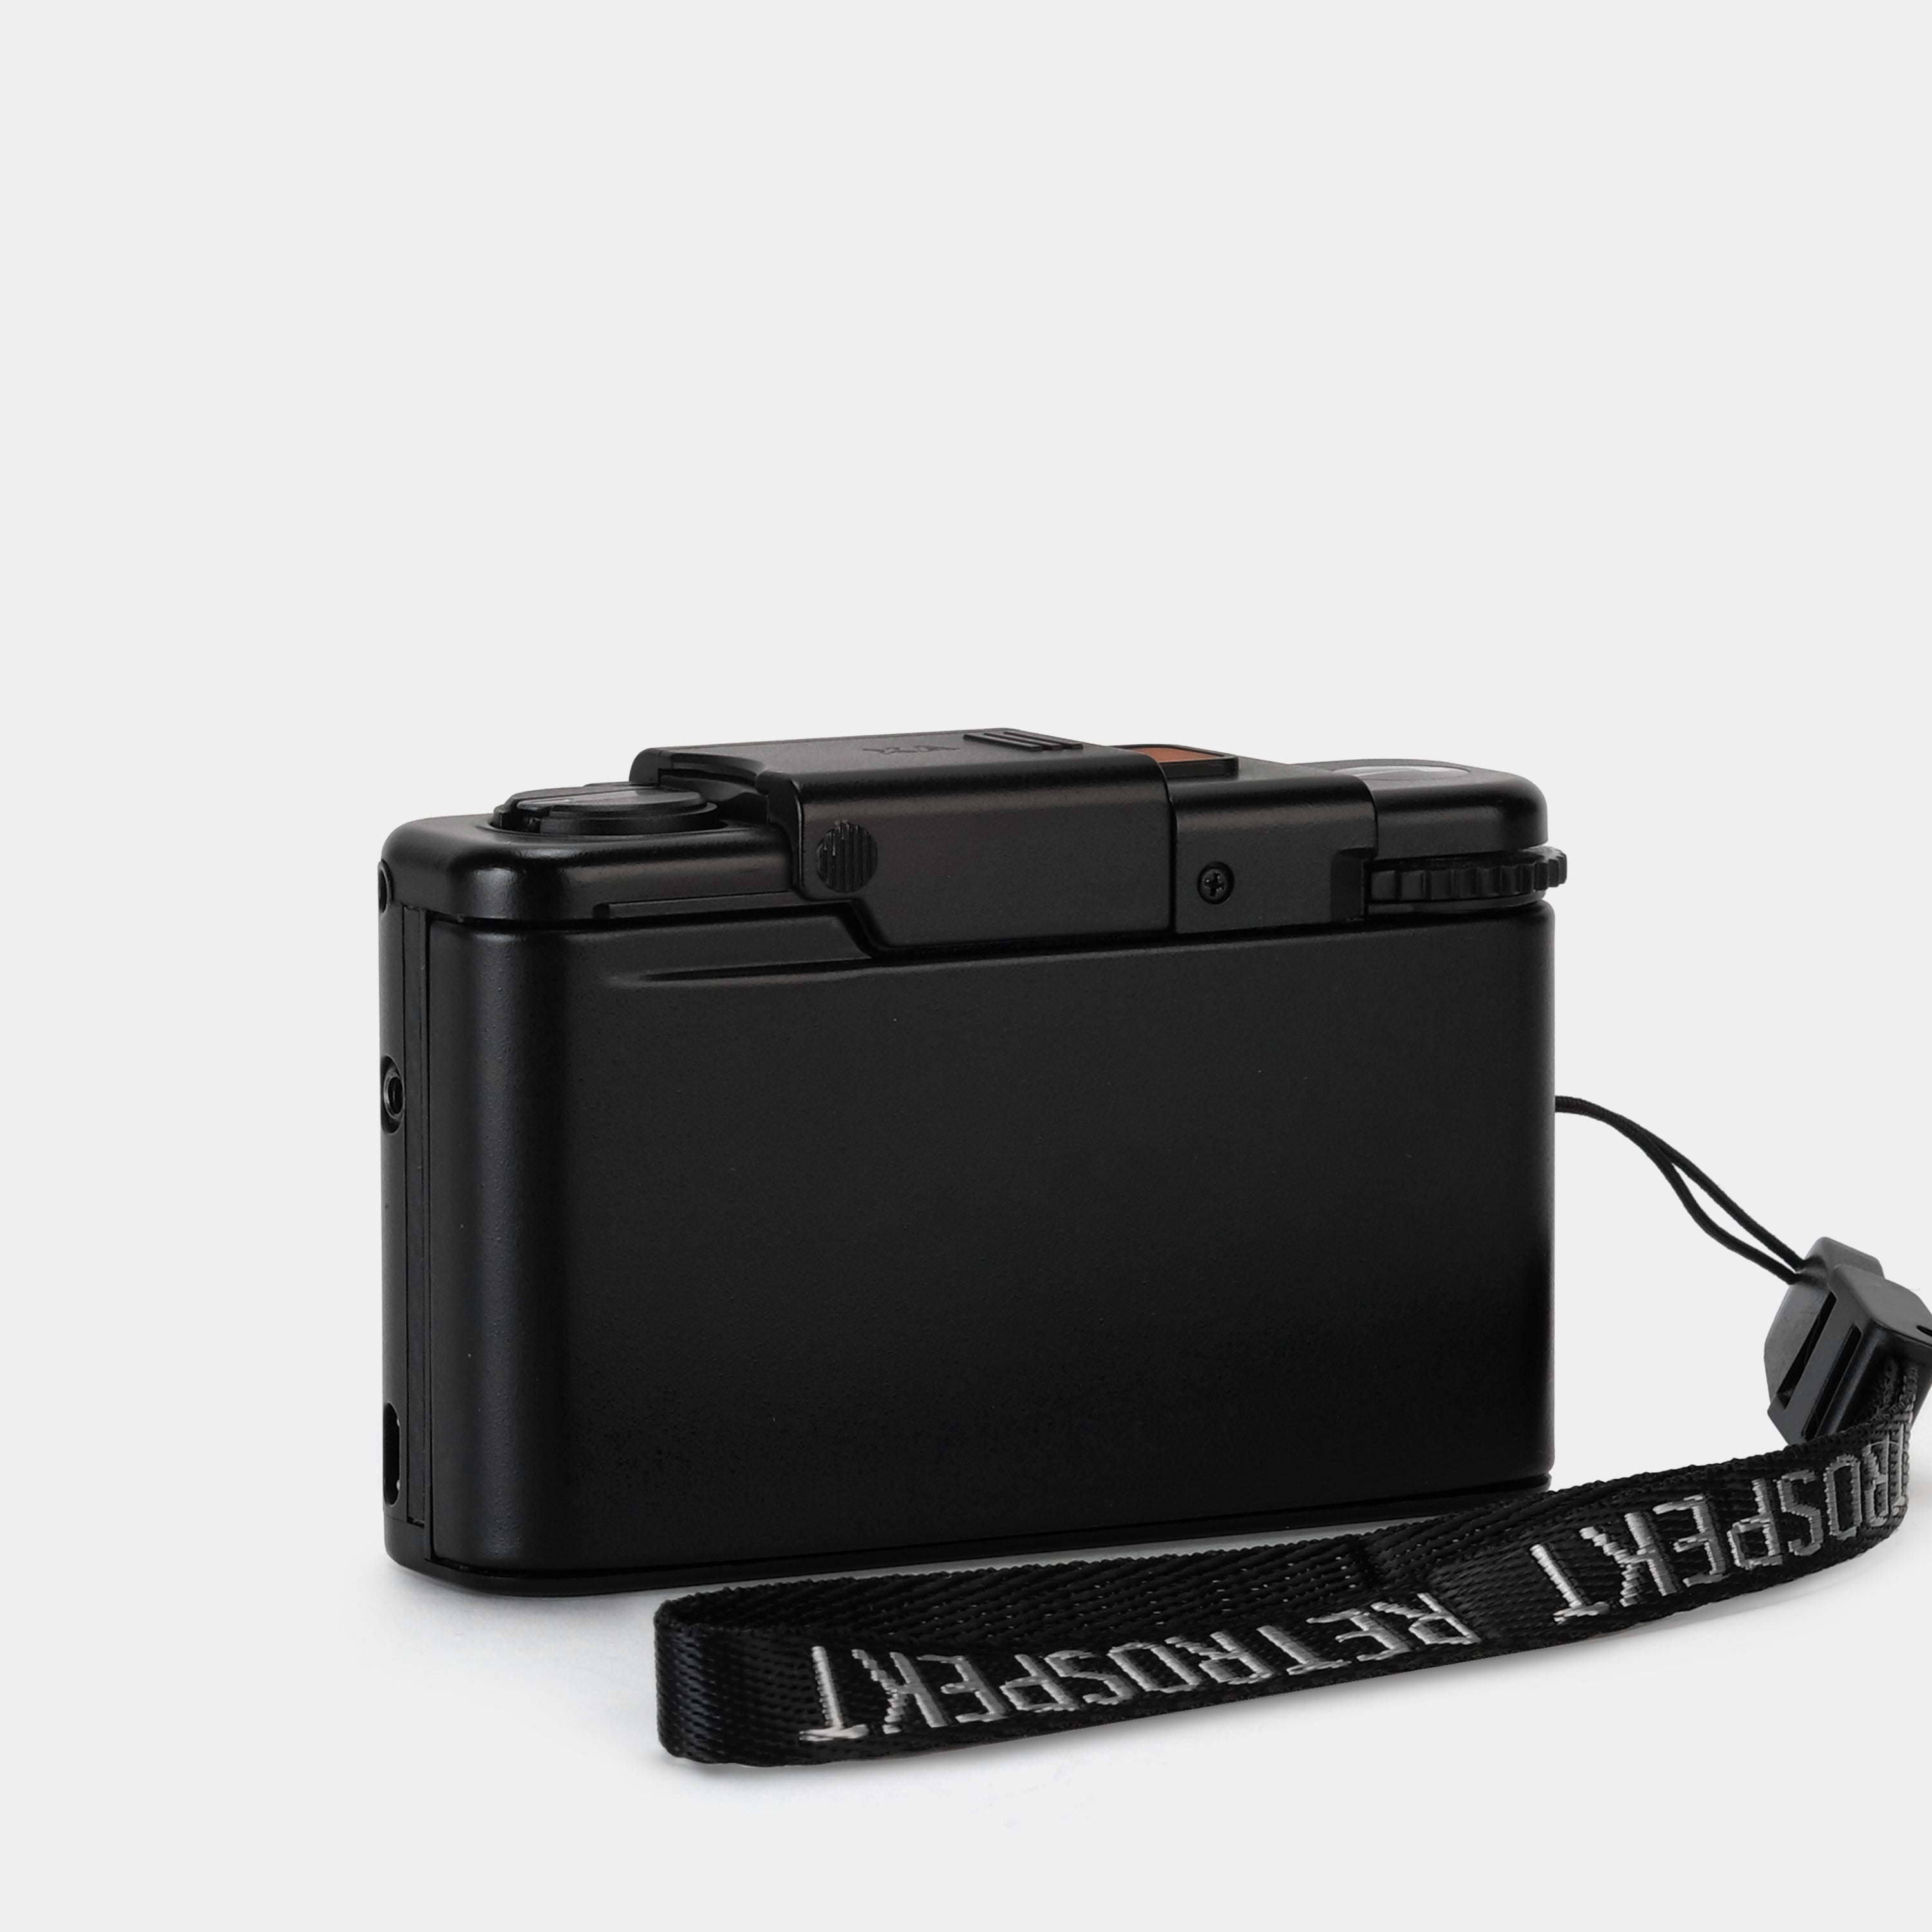 Olympus XA 35mm Rangefinder Film Camera